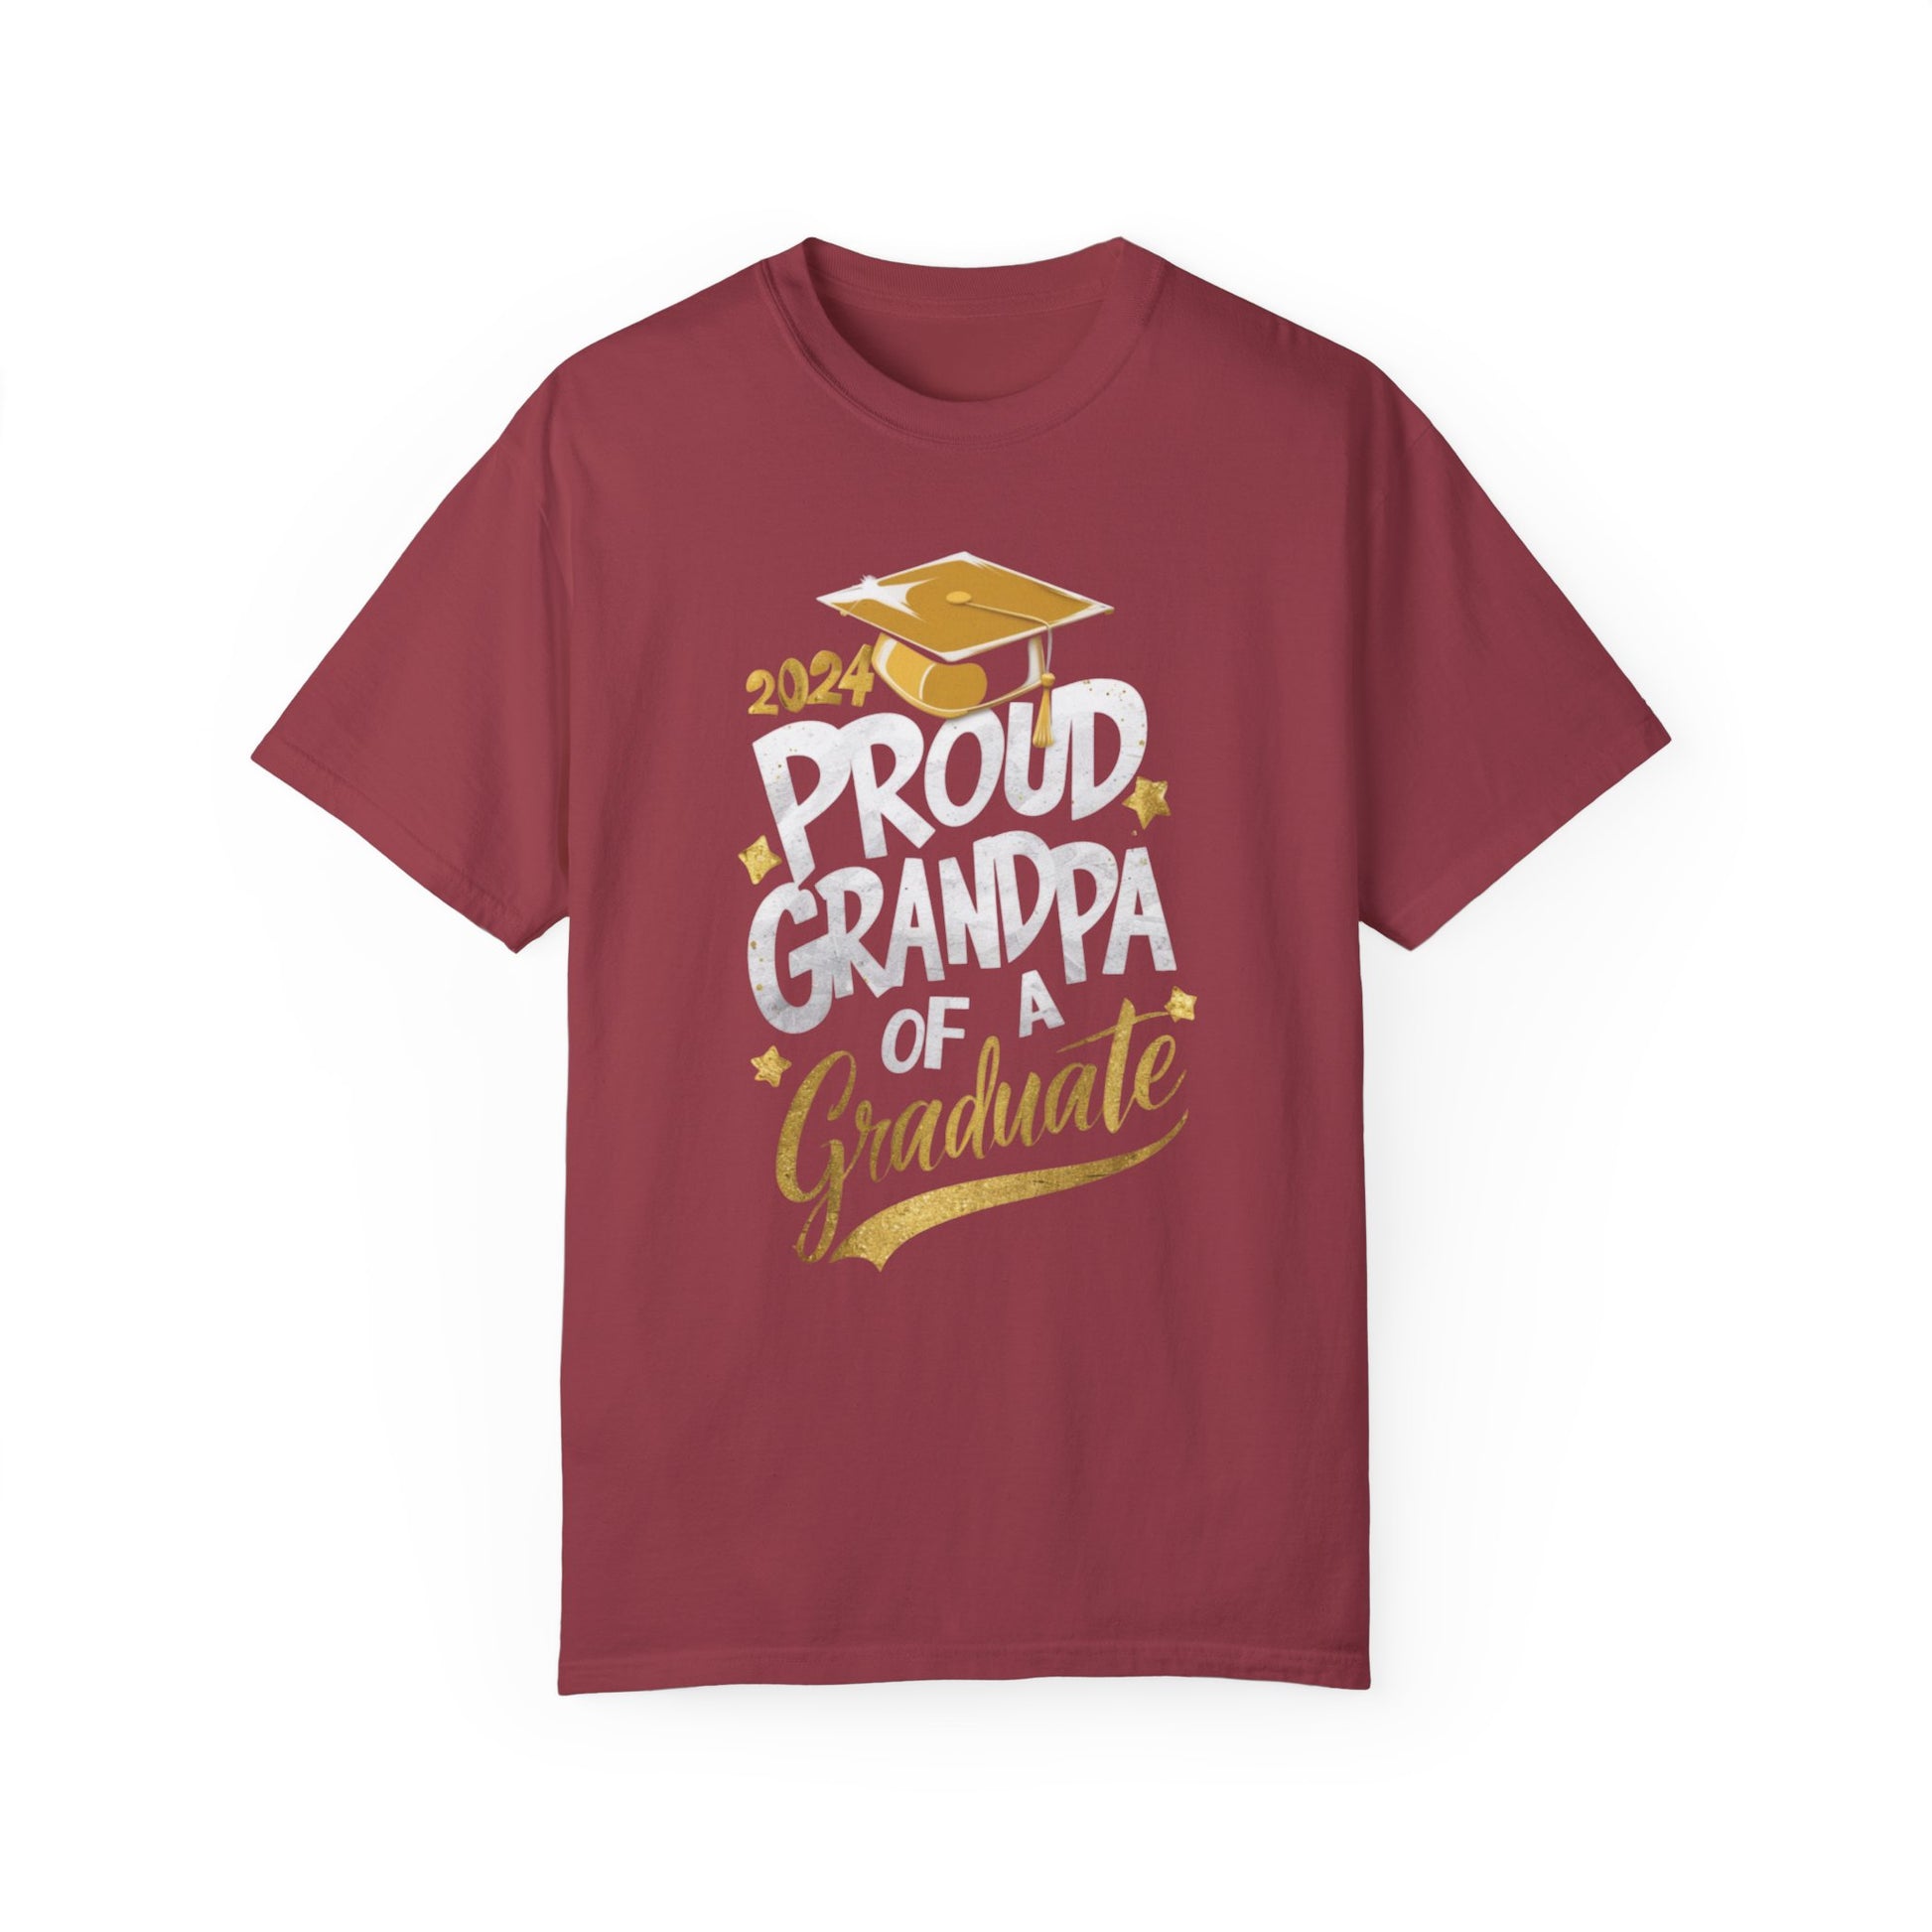 Proud Grandpa of a 2024 Graduate Unisex Garment-dyed T-shirt Cotton Funny Humorous Graphic Soft Premium Unisex Men Women Chili T-shirt Birthday Gift-7